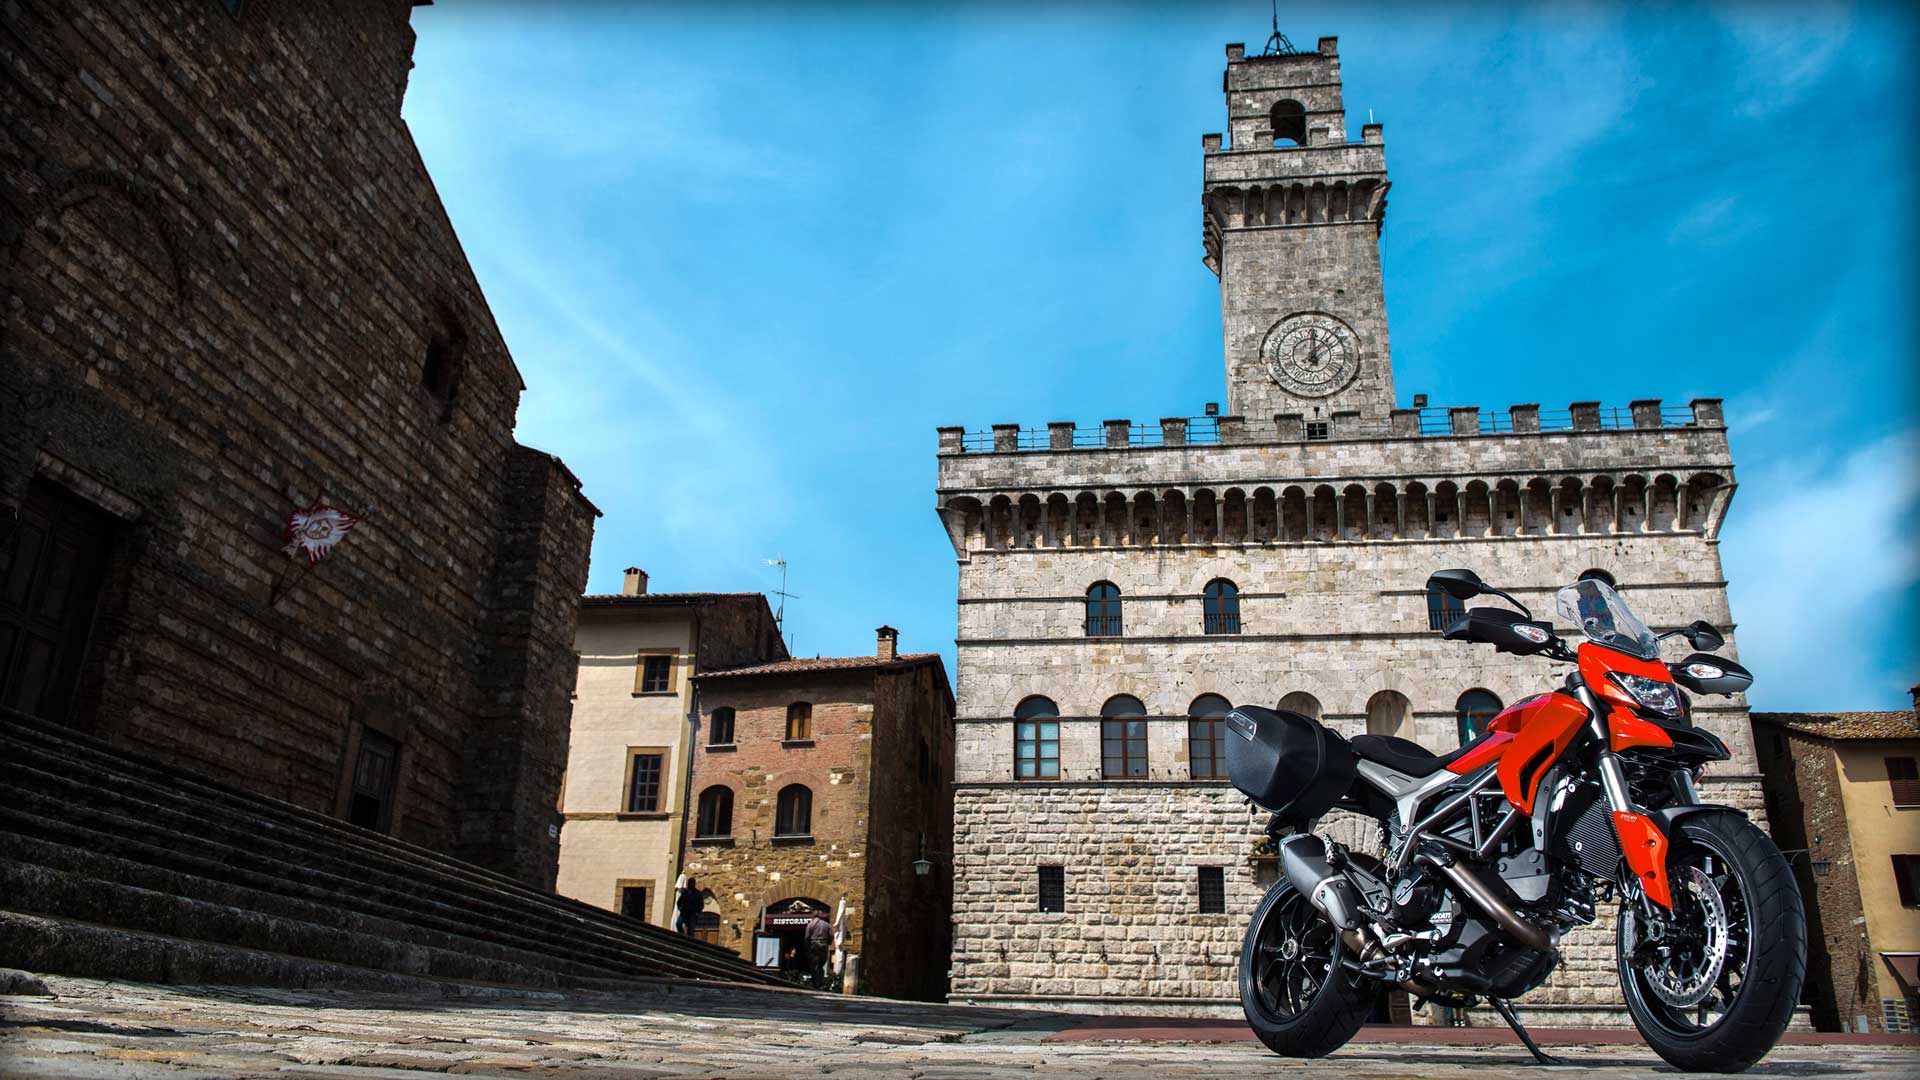 2014 Ducati Hyperstrada